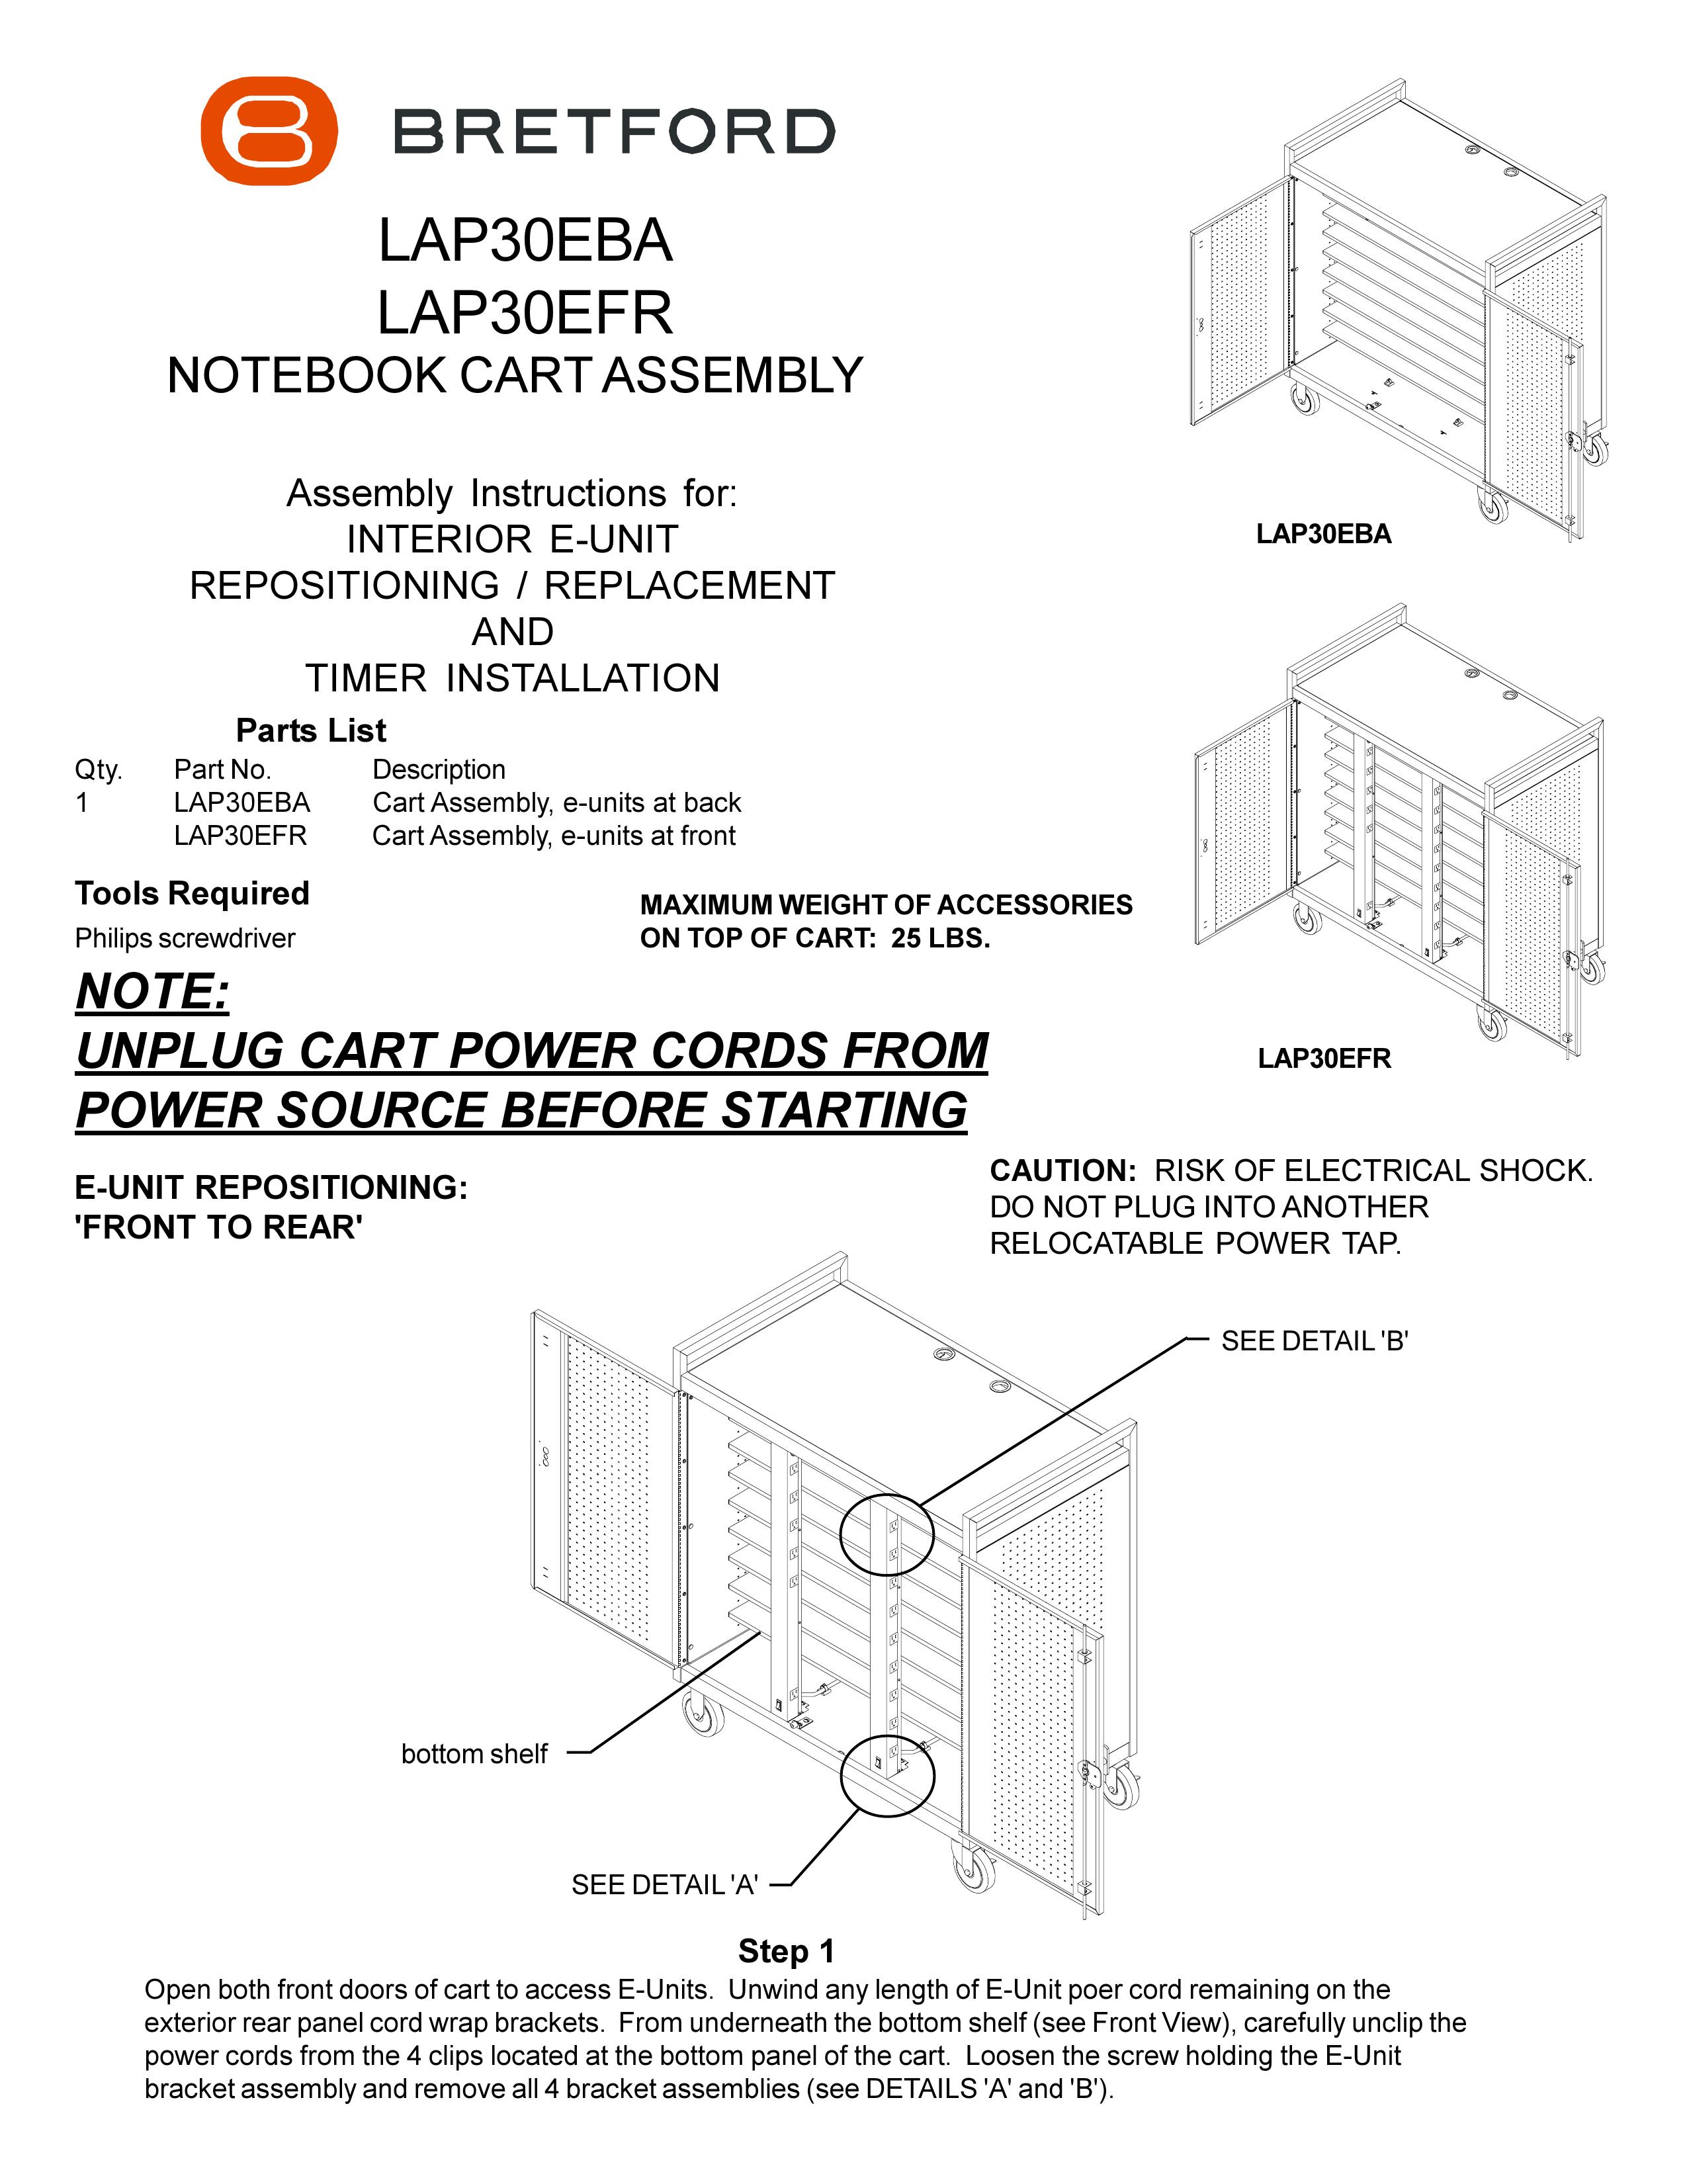 Bretford LAP30EBA Outdoor Cart User Manual